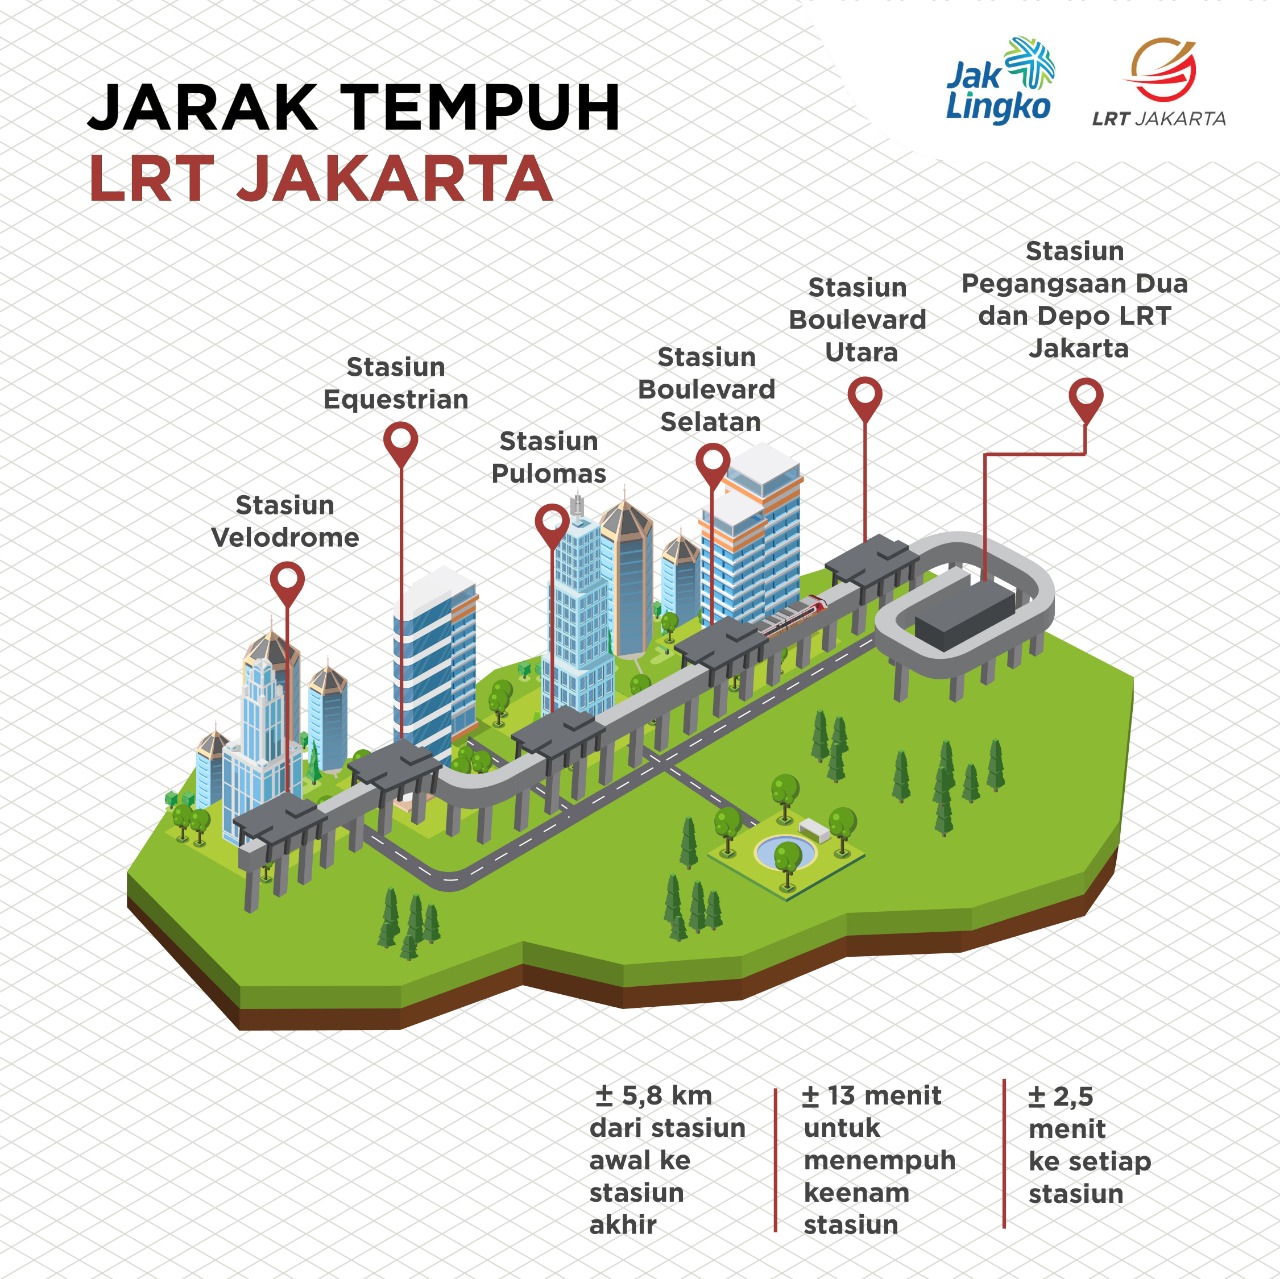 Jarak Tempuh LRT Jakarta